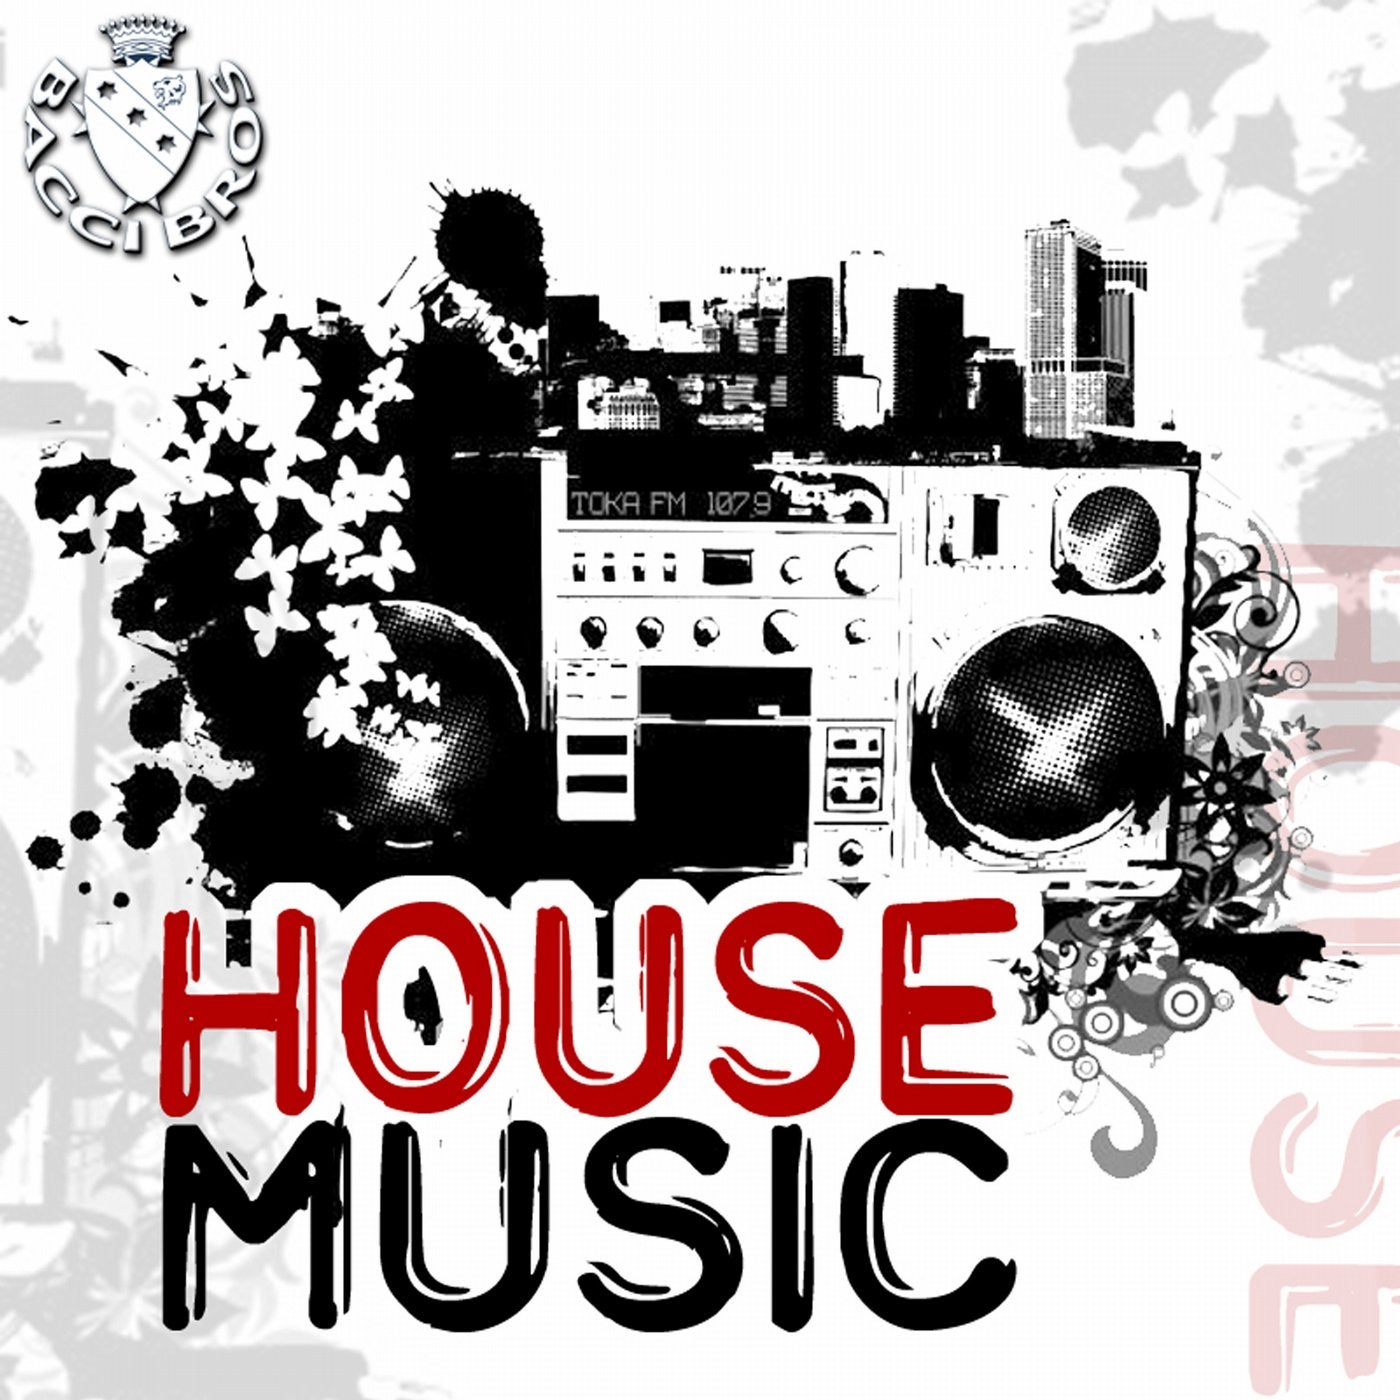 Песня house music. Музыкальный стиль House. House Music картинки. Хаус Жанр. Музыкальный стиль Хаус в рисунках.